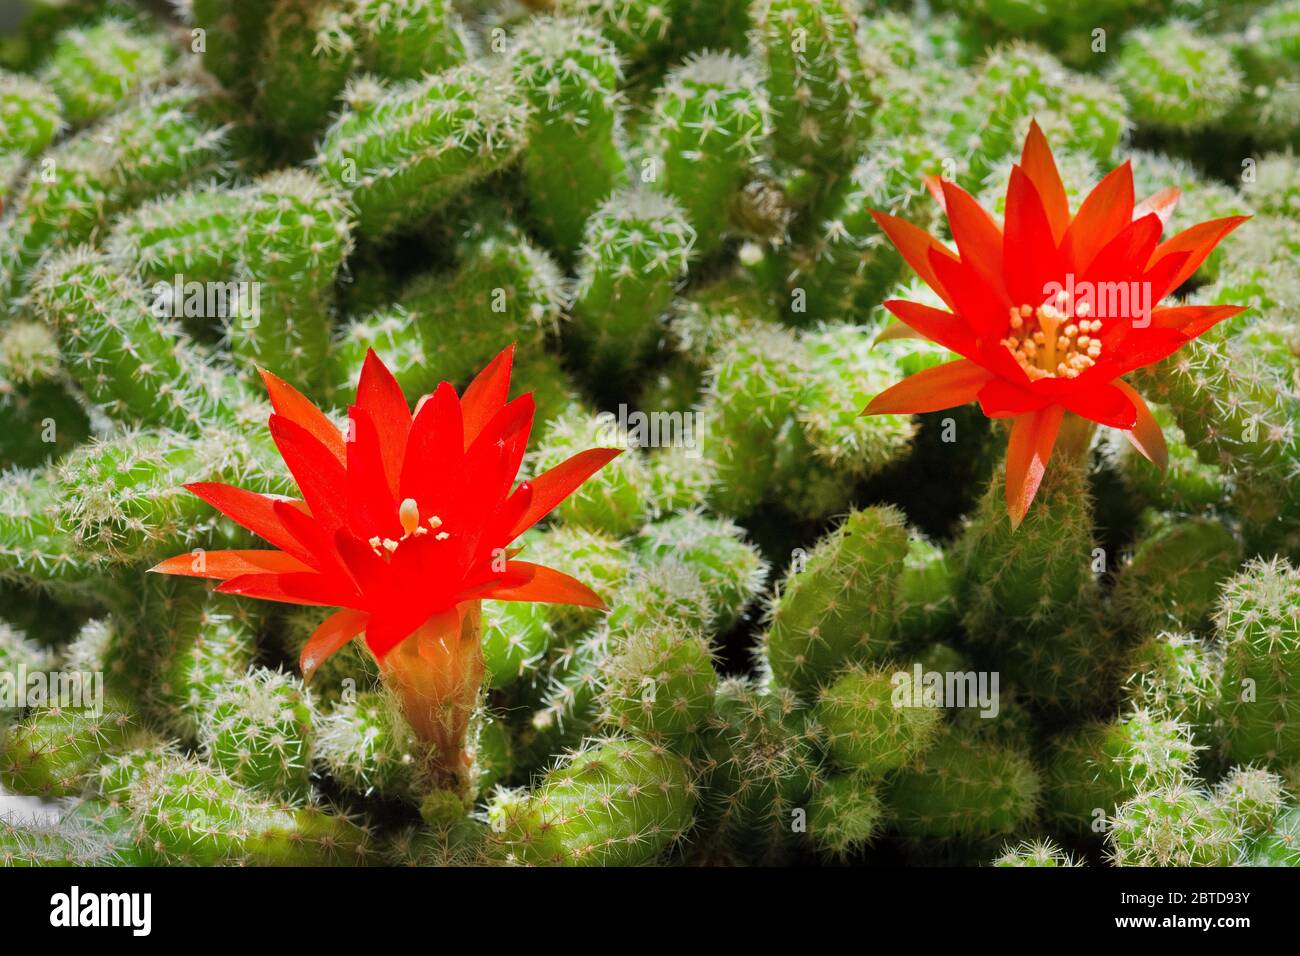 Red flowers of Aporocactus flagelliformis Stock Photo